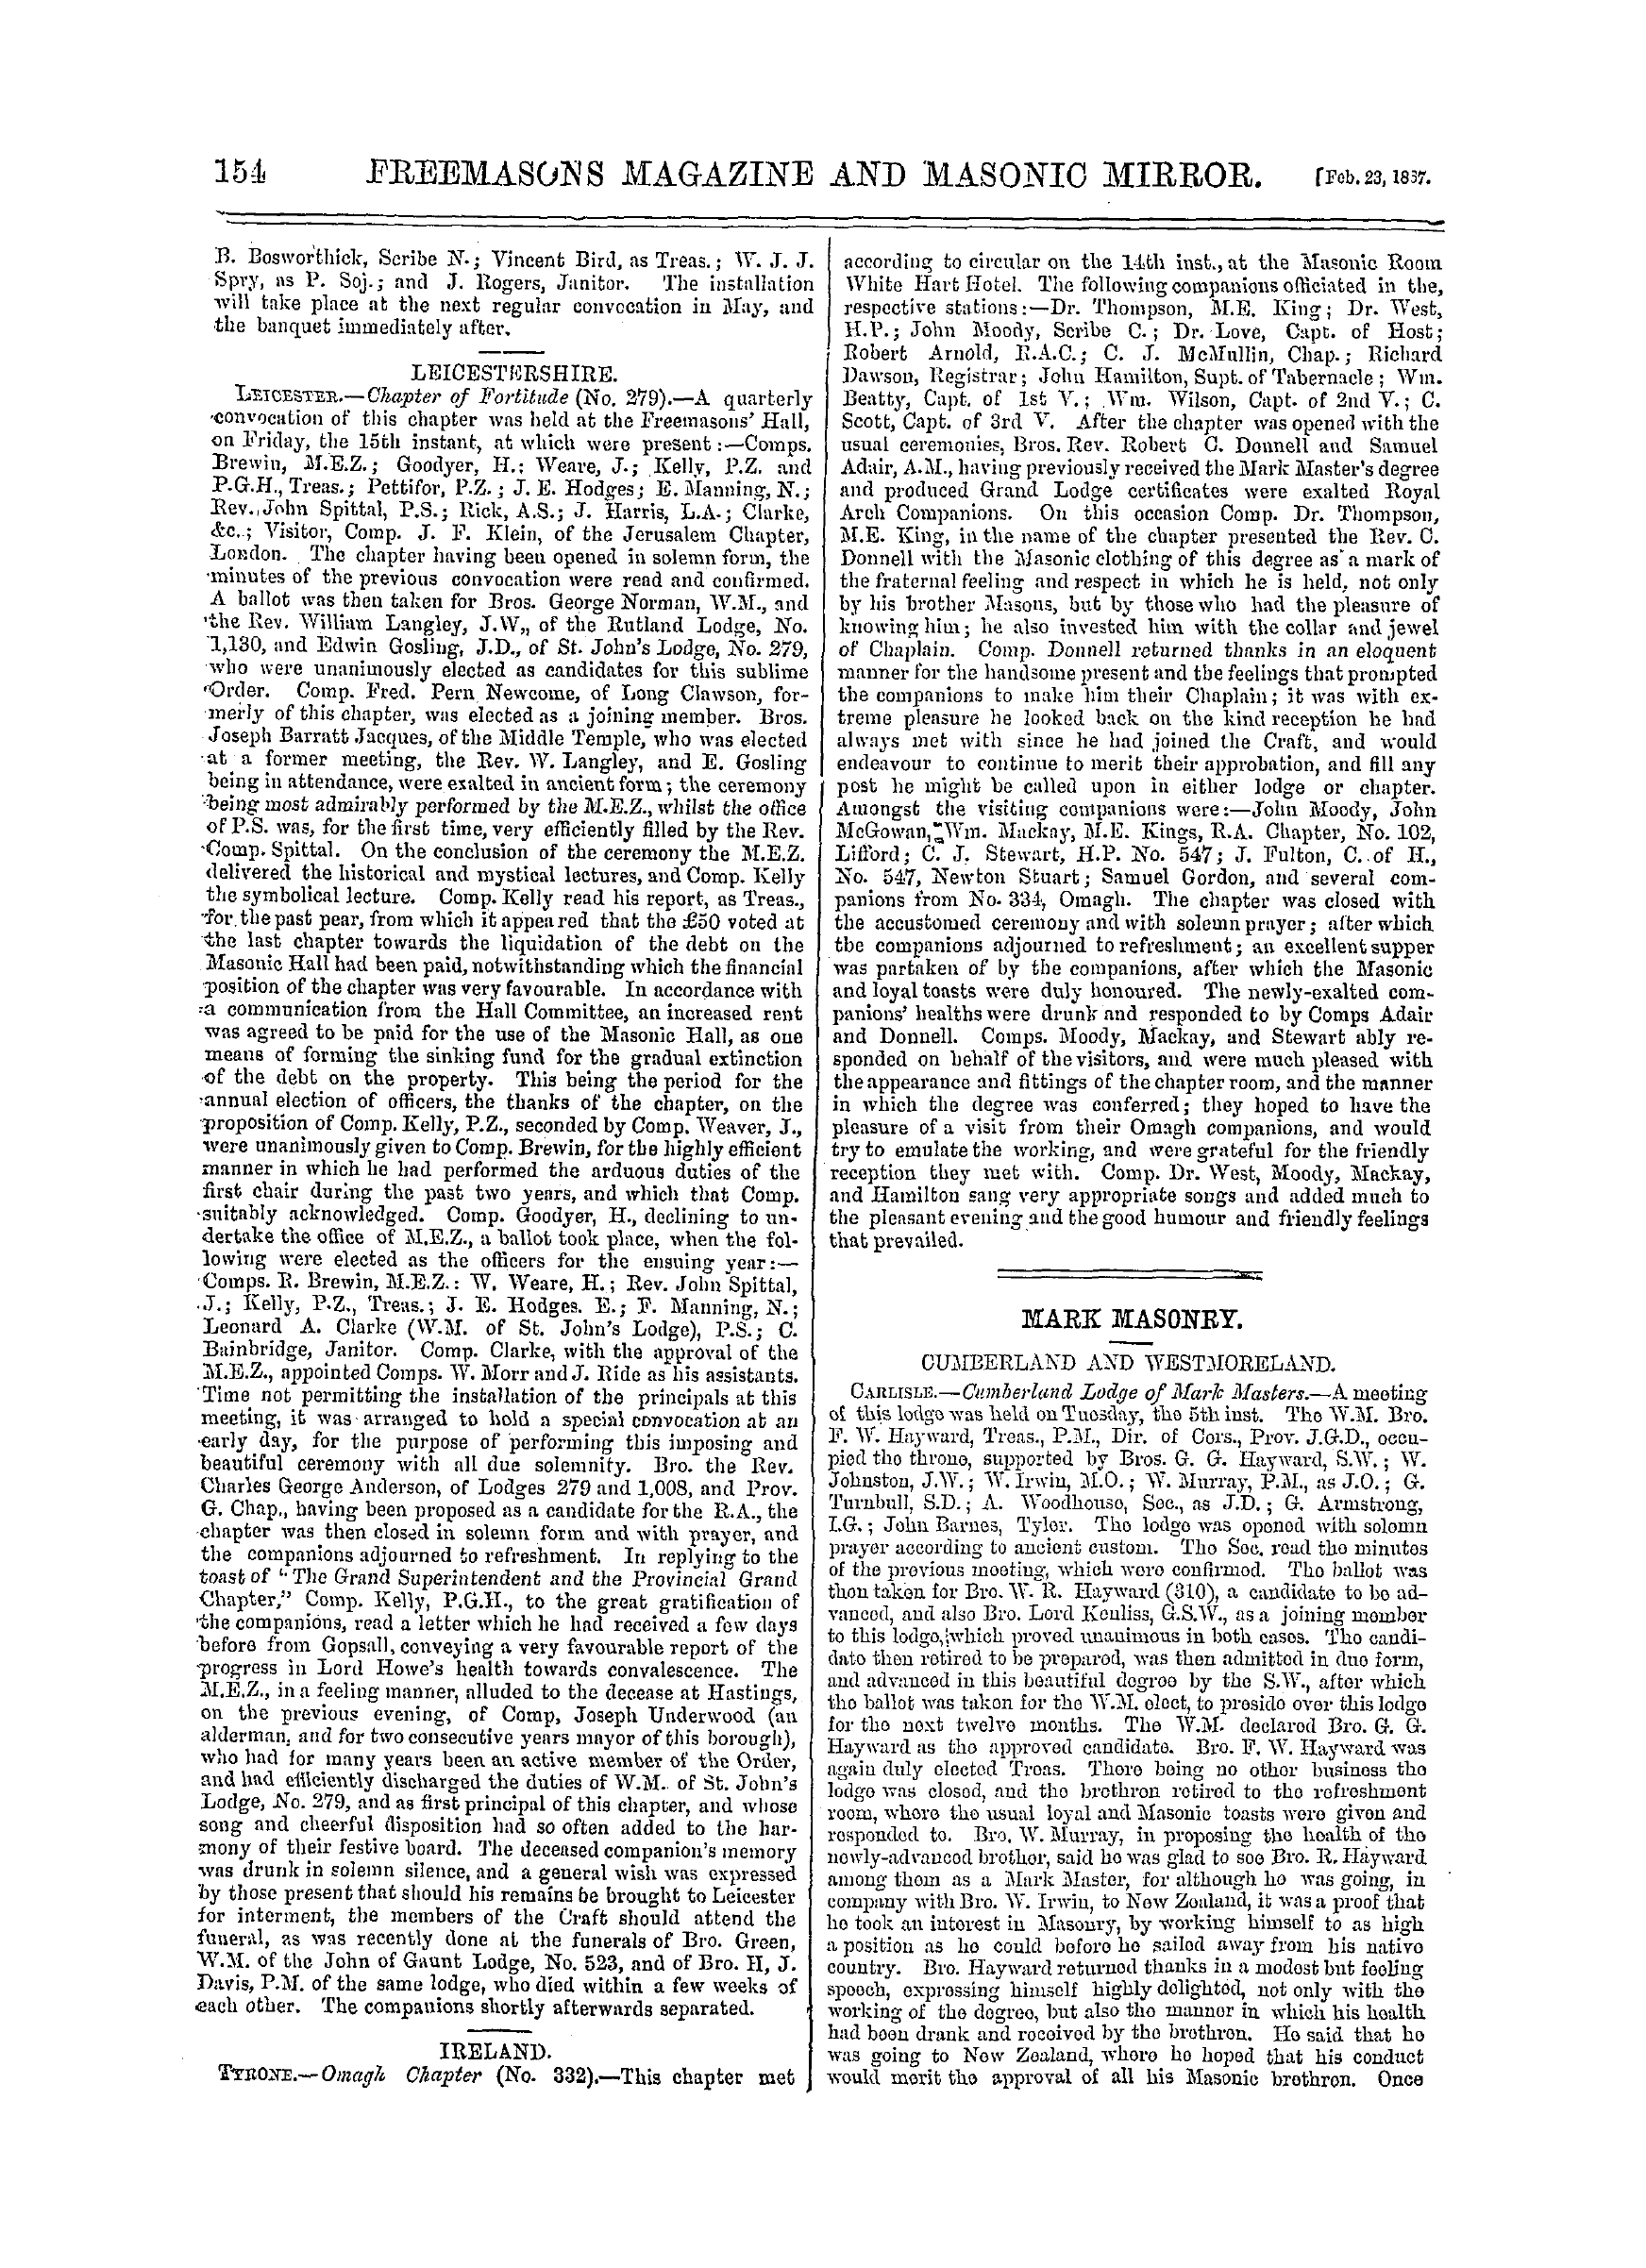 The Freemasons' Monthly Magazine: 1867-02-23 - Royal Arch.